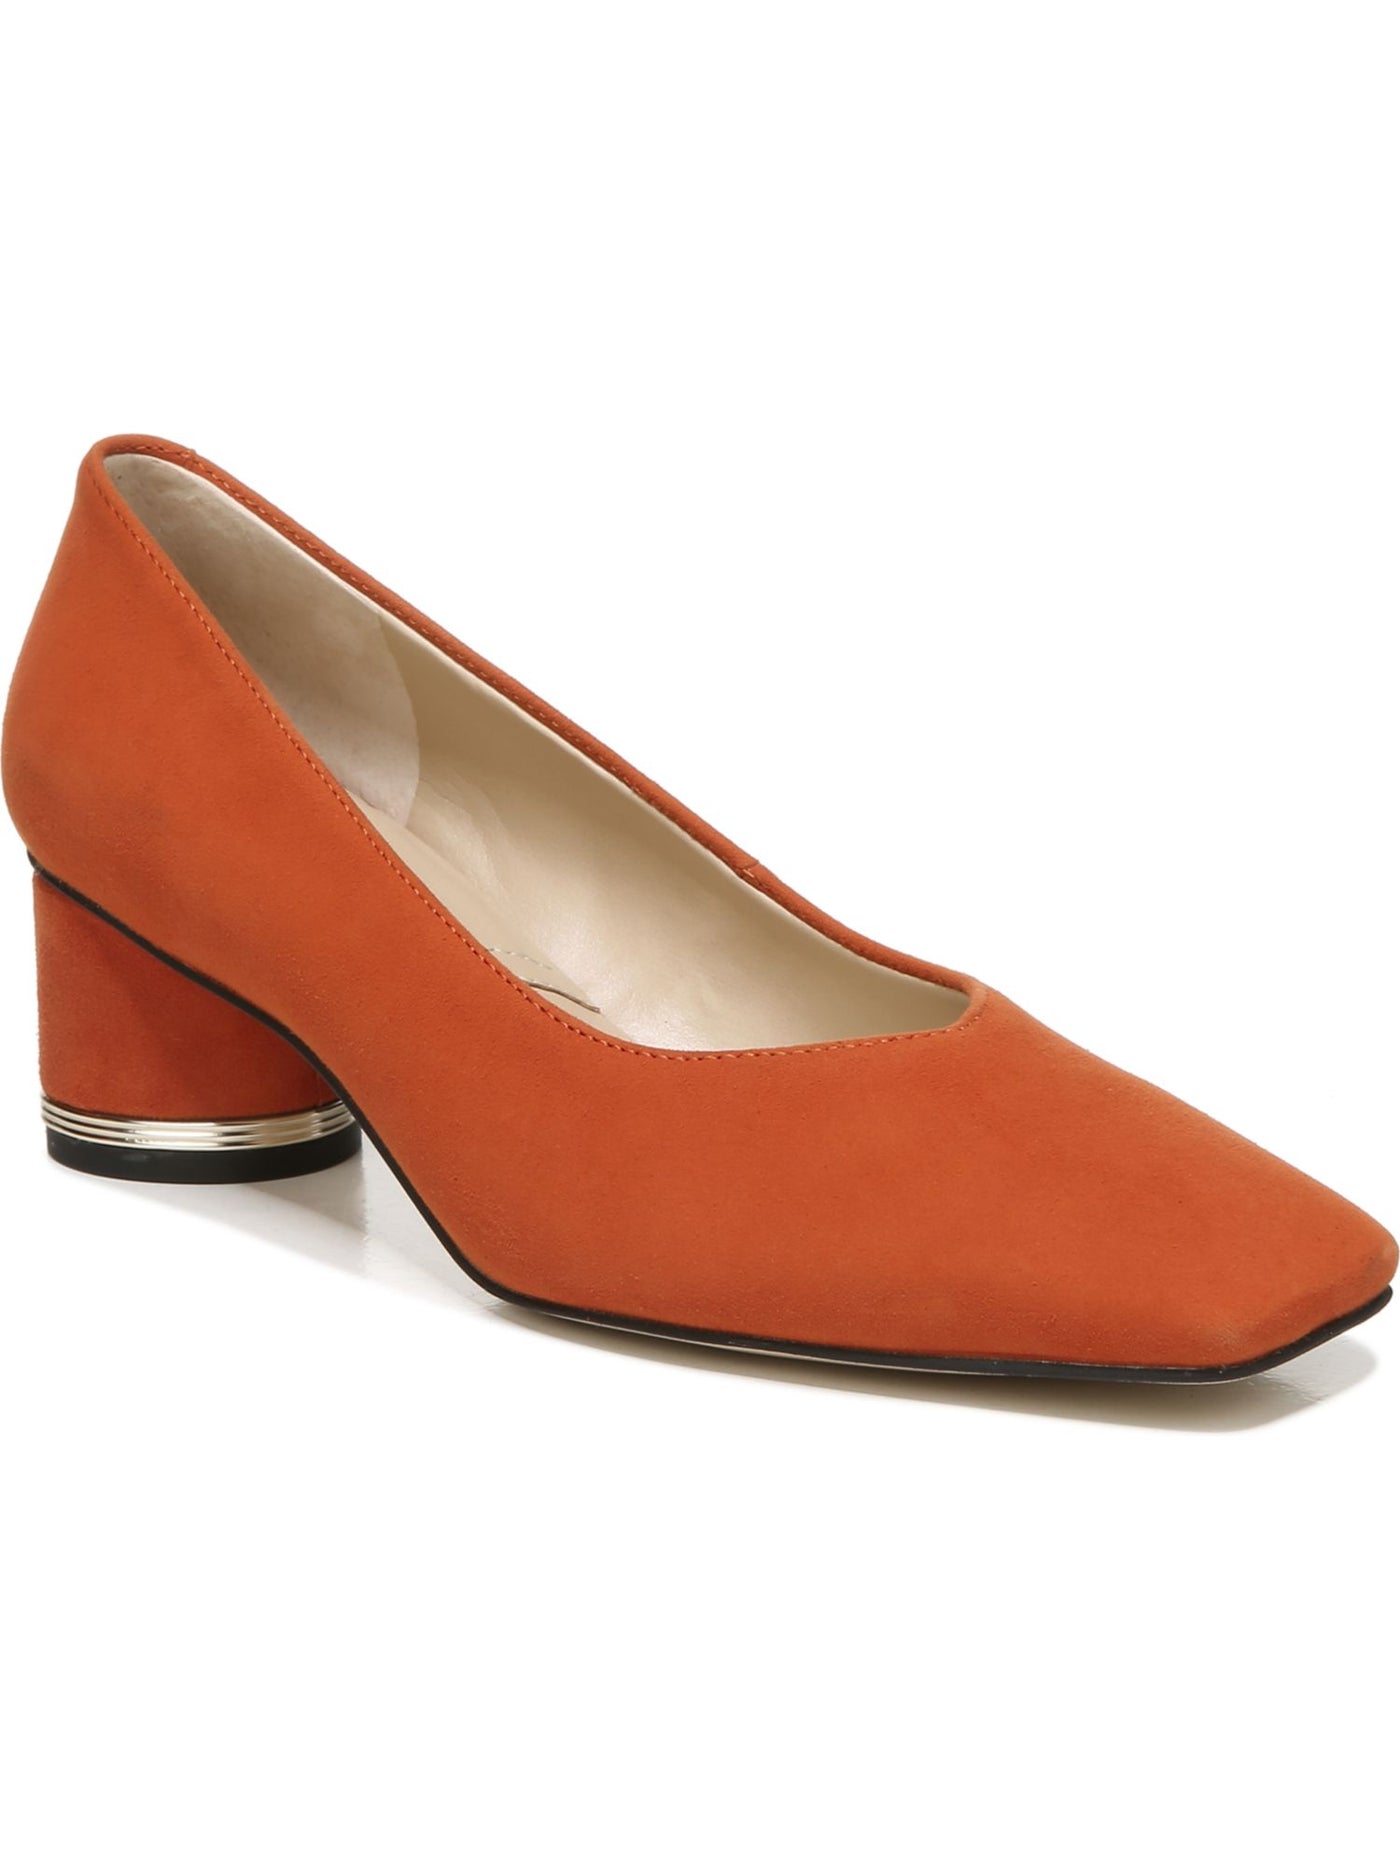 FRANCO SARTO Womens Orange Padded Pisa Square Toe Slip On Leather Dress Pumps Shoes 7 M